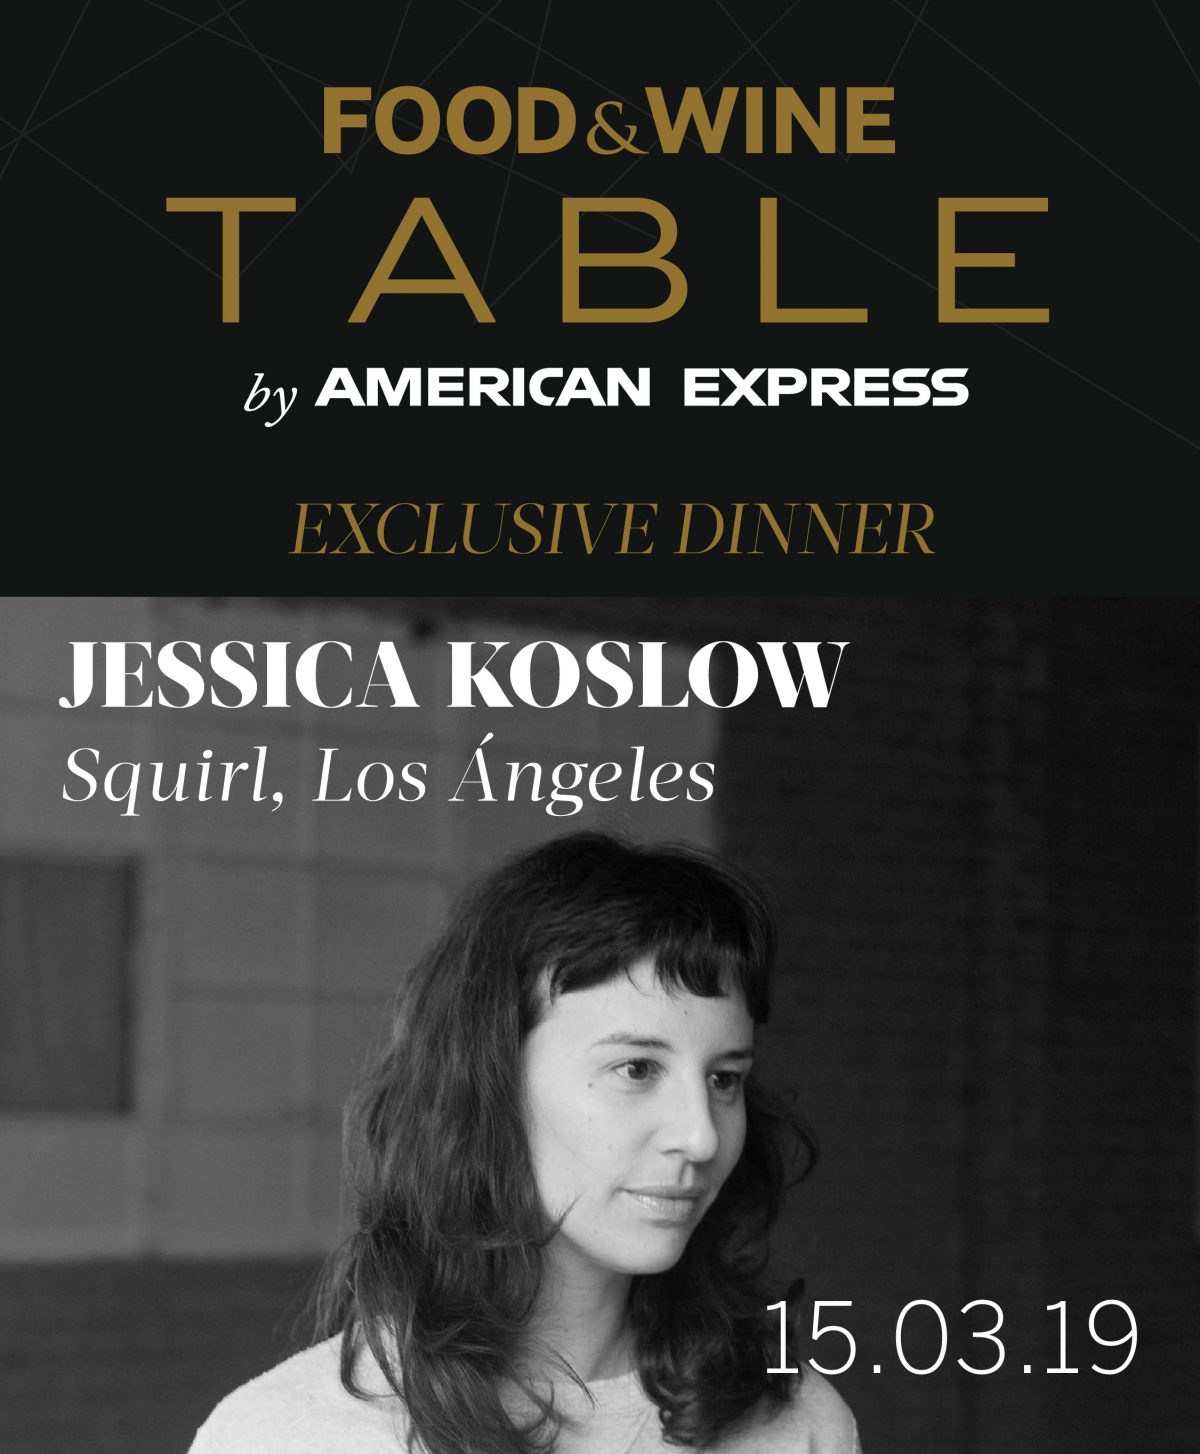 Jessica Koslow traslada su reino vegetal a 'Table'